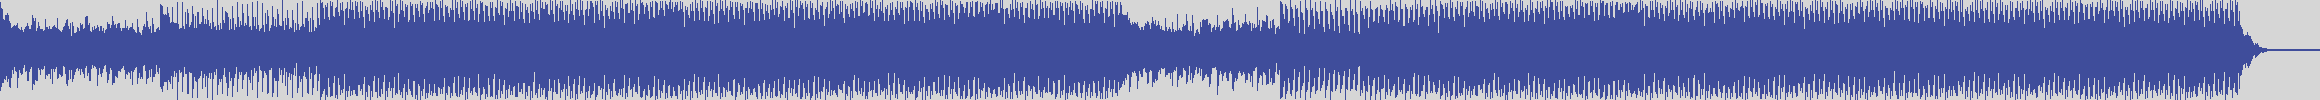 nf_boyz_records [NFY028] Heart - Soave [Deep Rhythms Mix] audio wave form